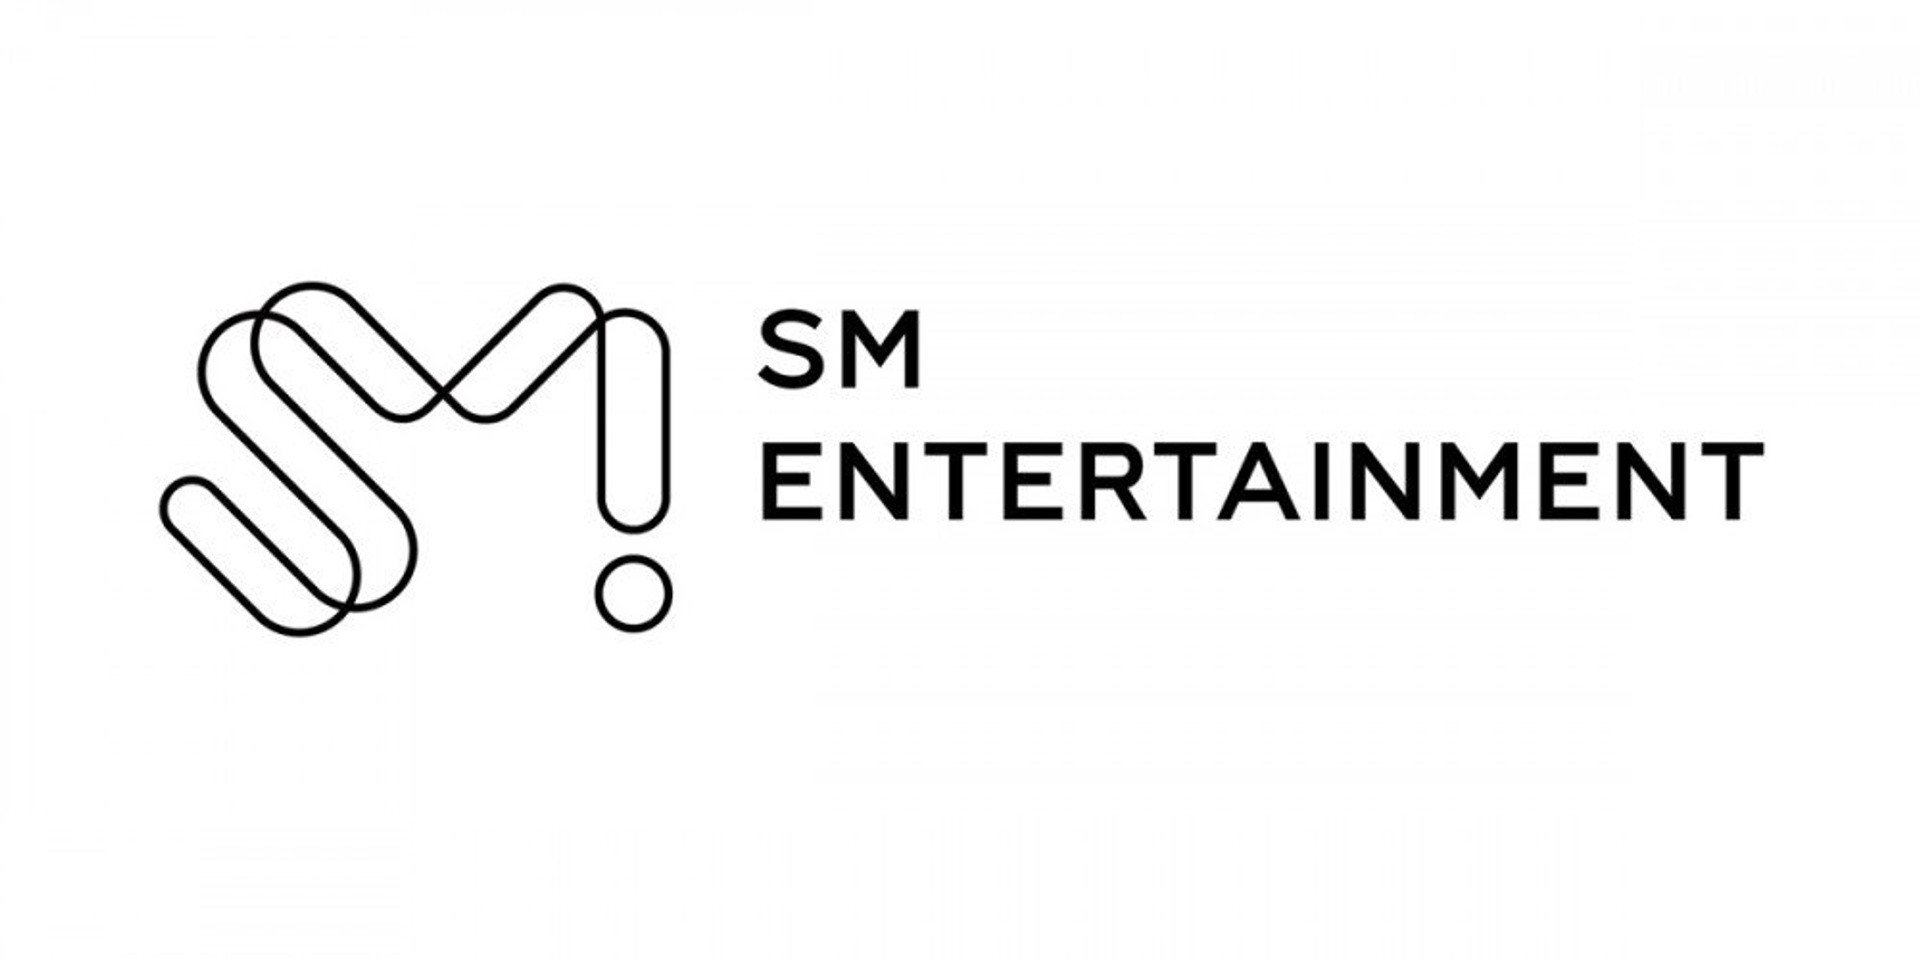 SM Entertainment to establish Southeast Asia headquarters and open retail stores in Singapore